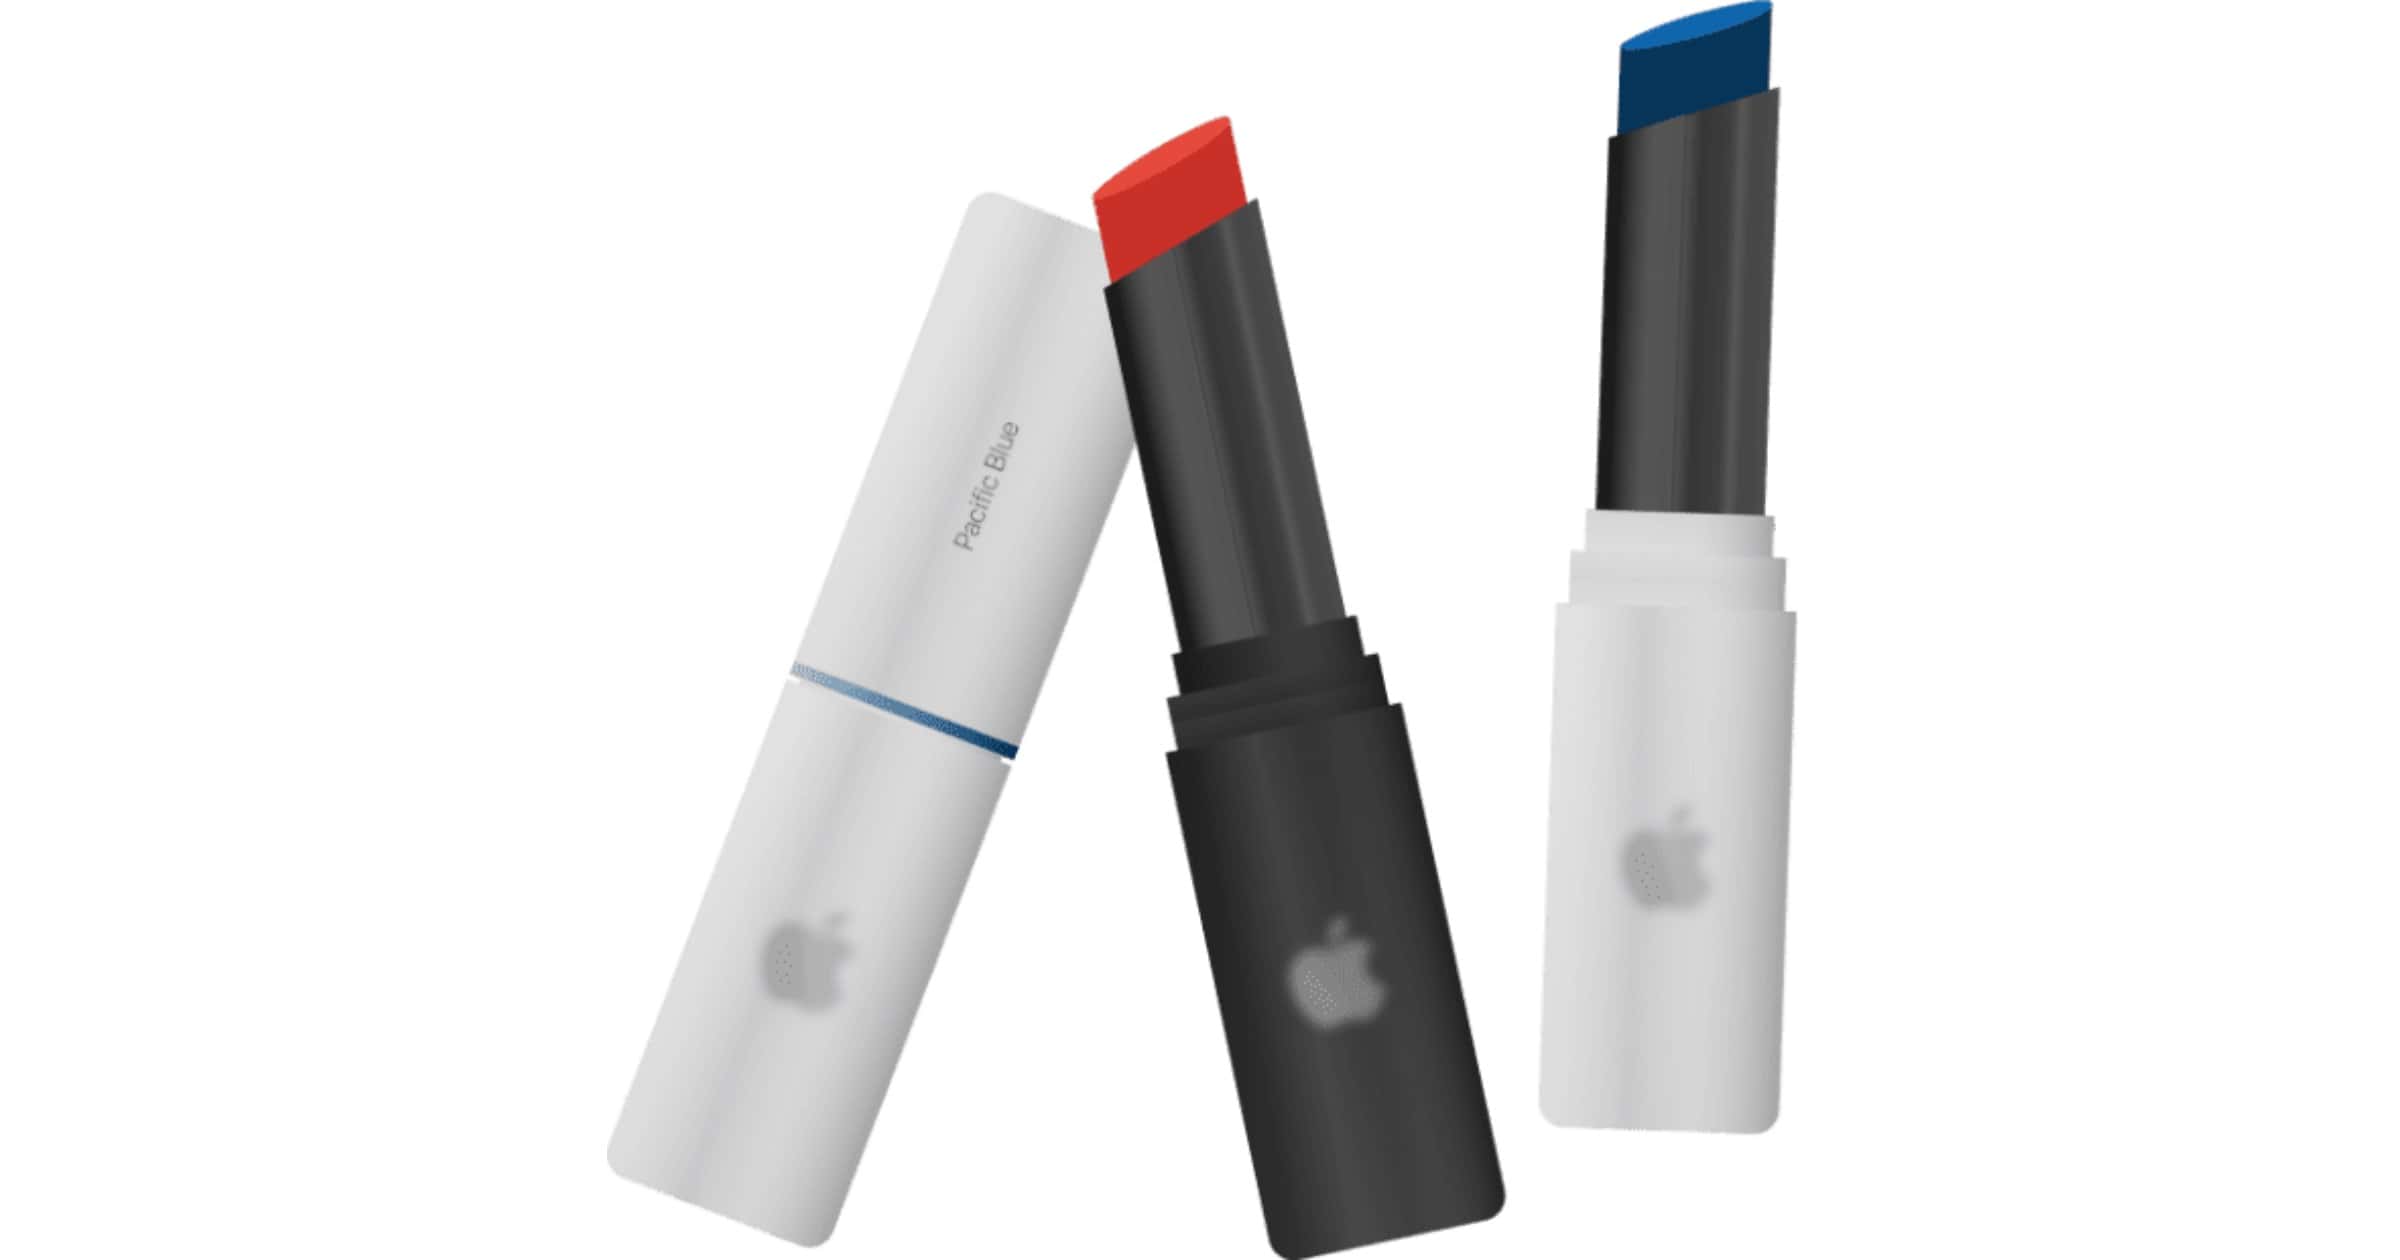 Apple Mac Lipstick concept